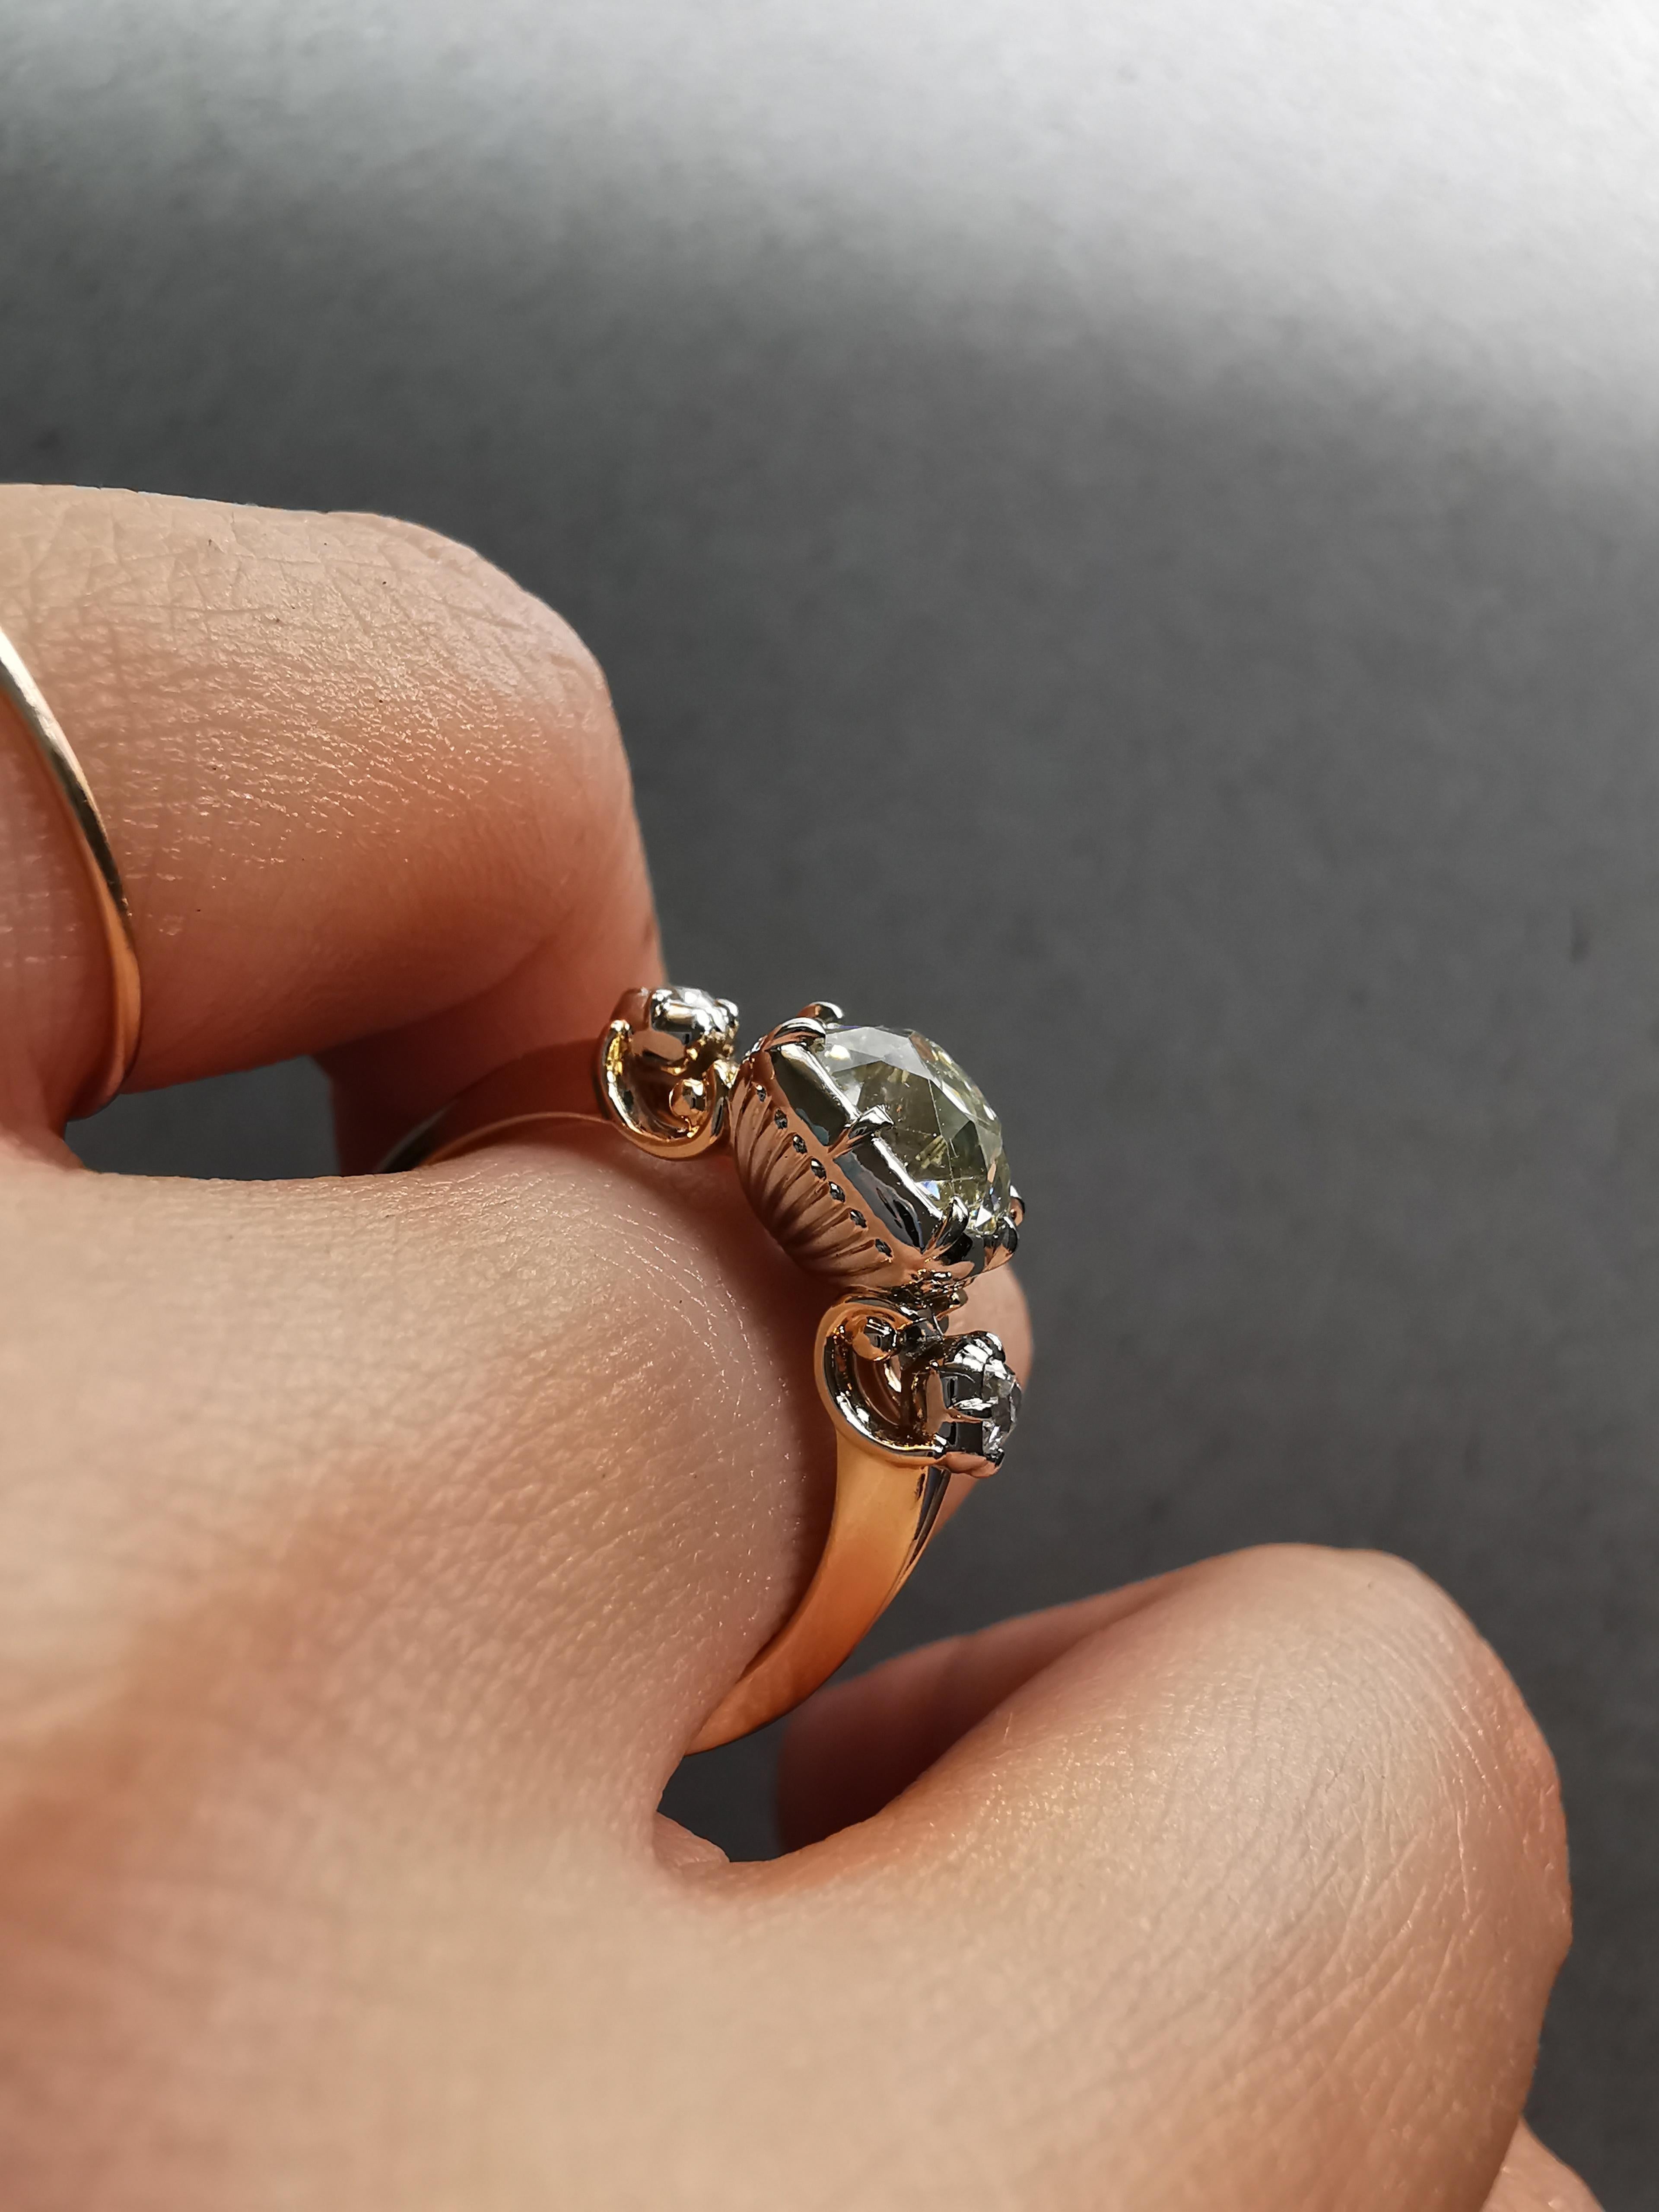 shantel jackson engagement ring